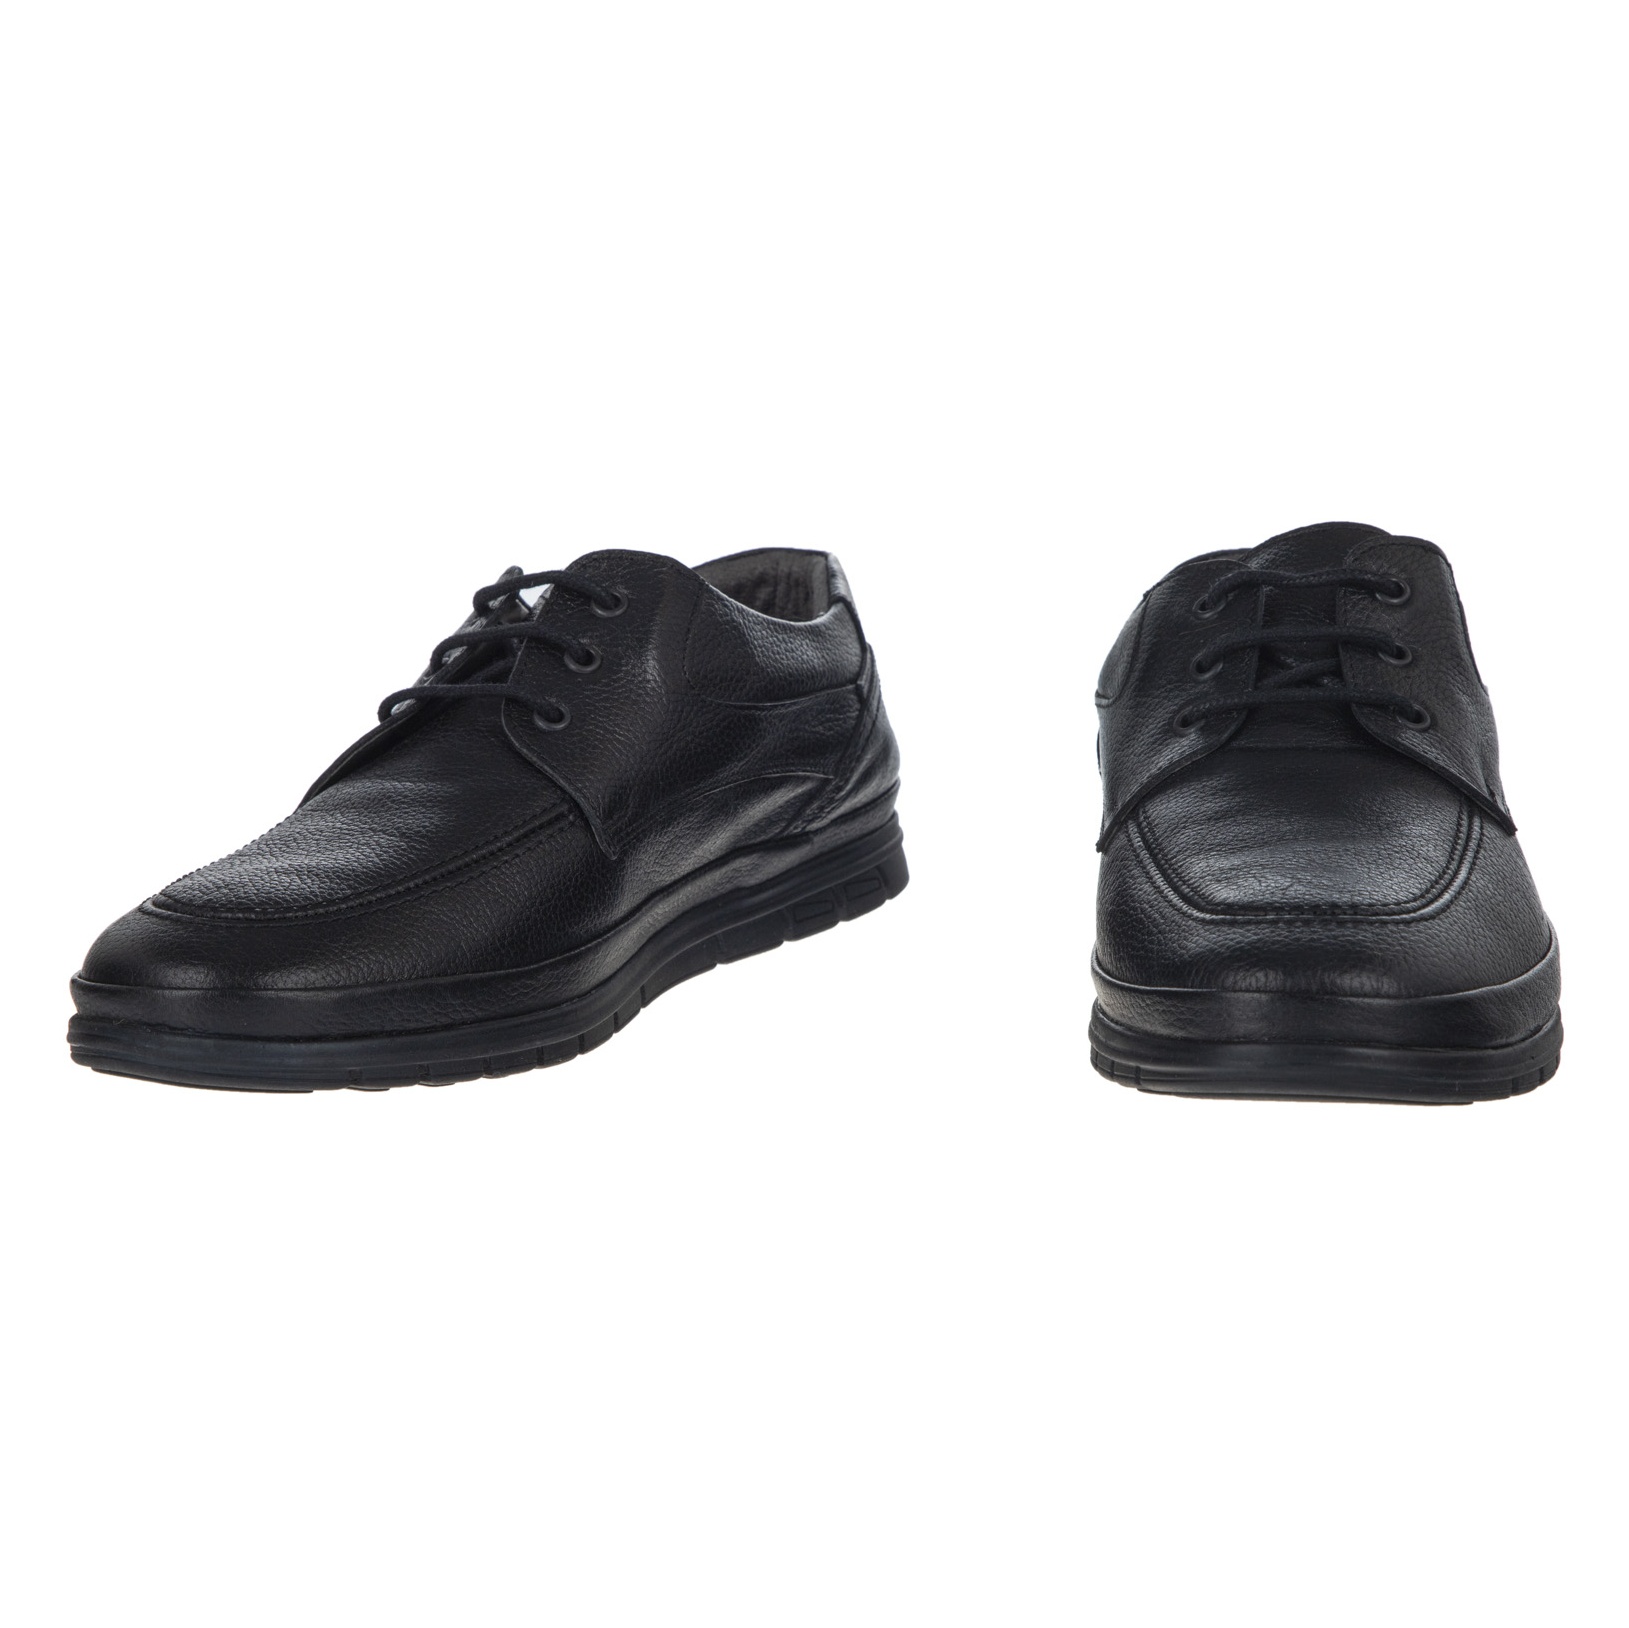 کفش روزمره مردانه پولاریس مدل 100296894-101 - مشکی - 4